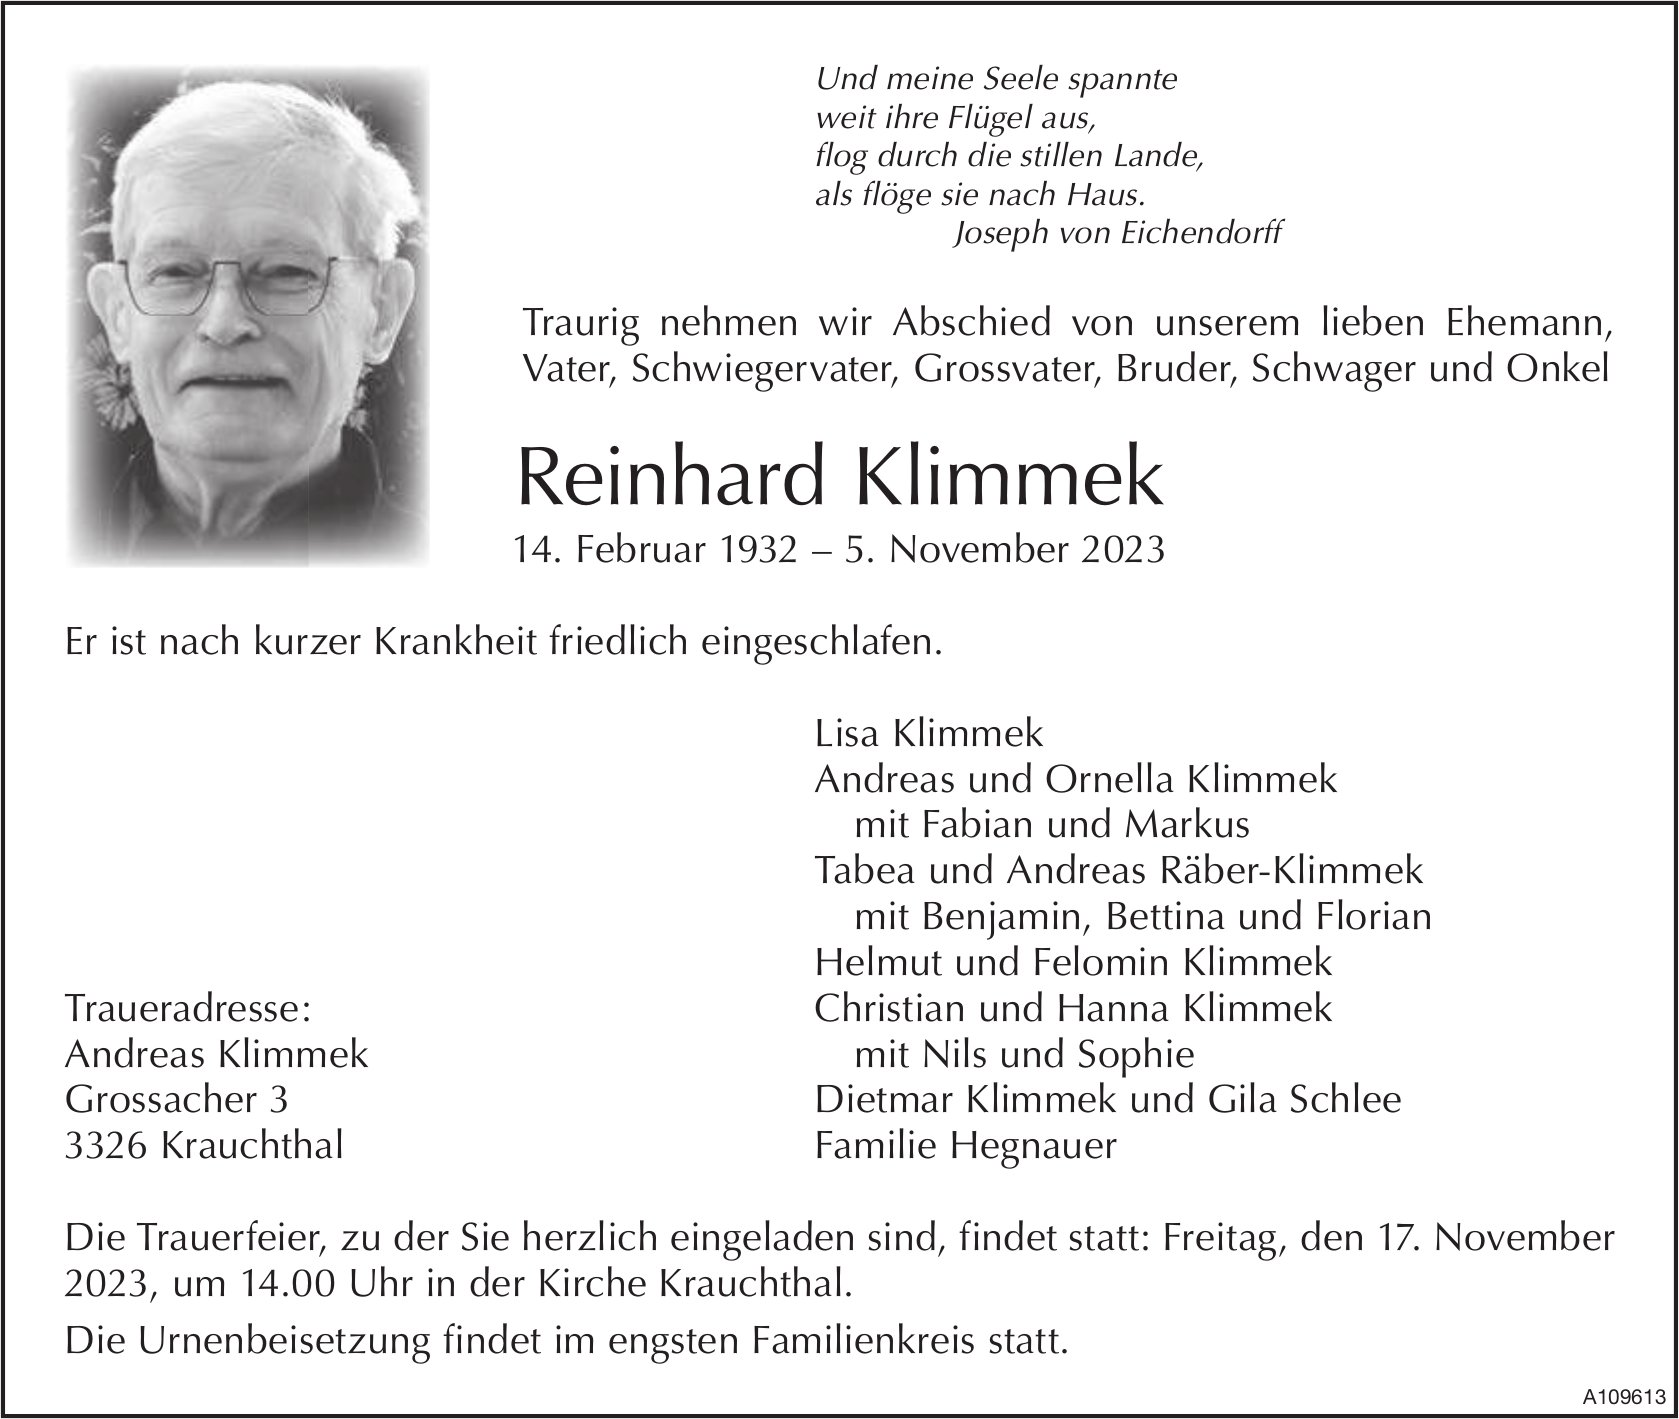 Reinhard Klimmek, November 2023 / TA